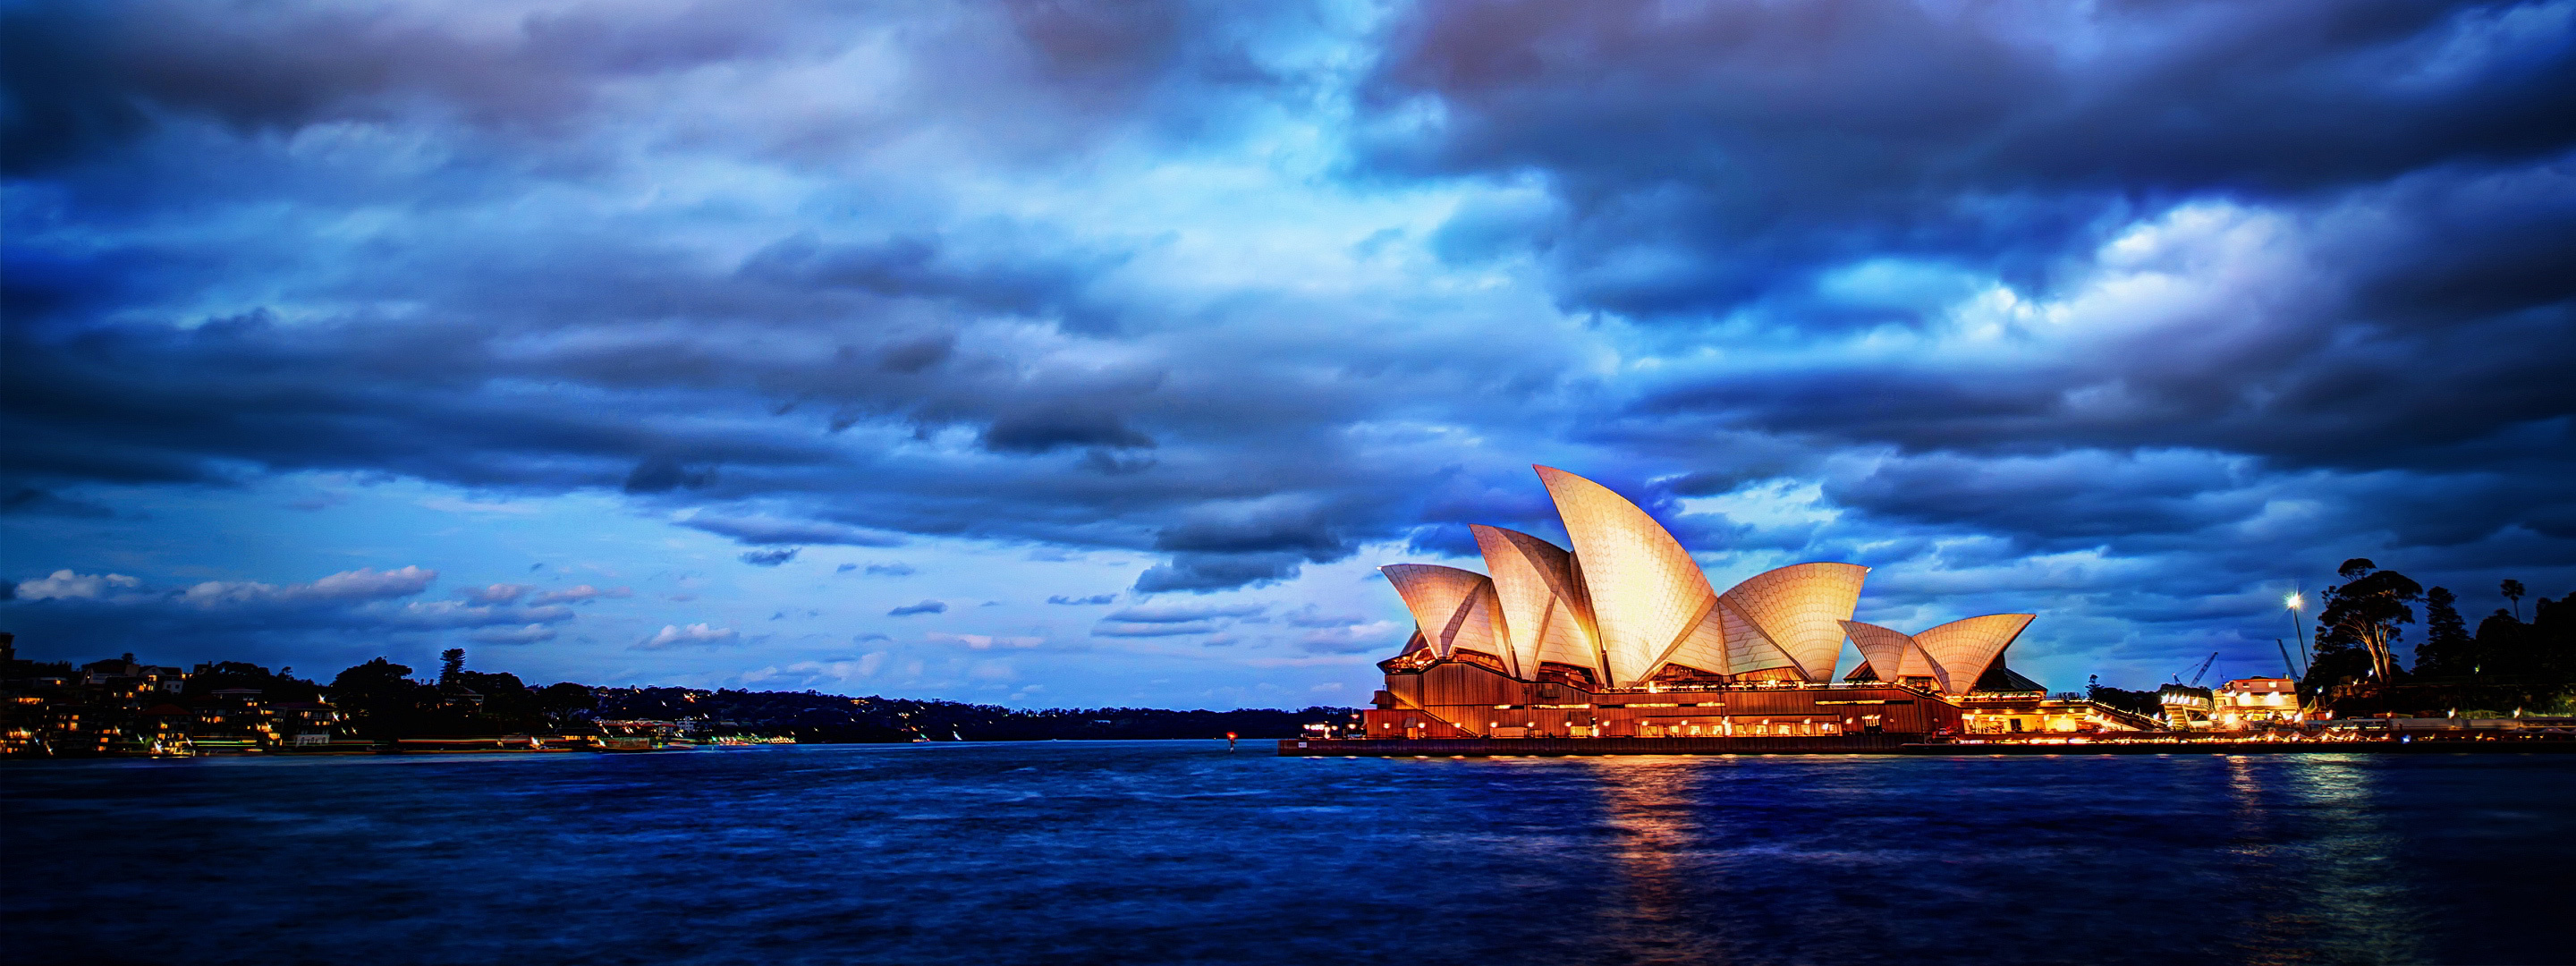 Opera House in Sydney, Beautiful wallpaper, Stunning beach backdrop, 2880x1080 Dual Screen Desktop